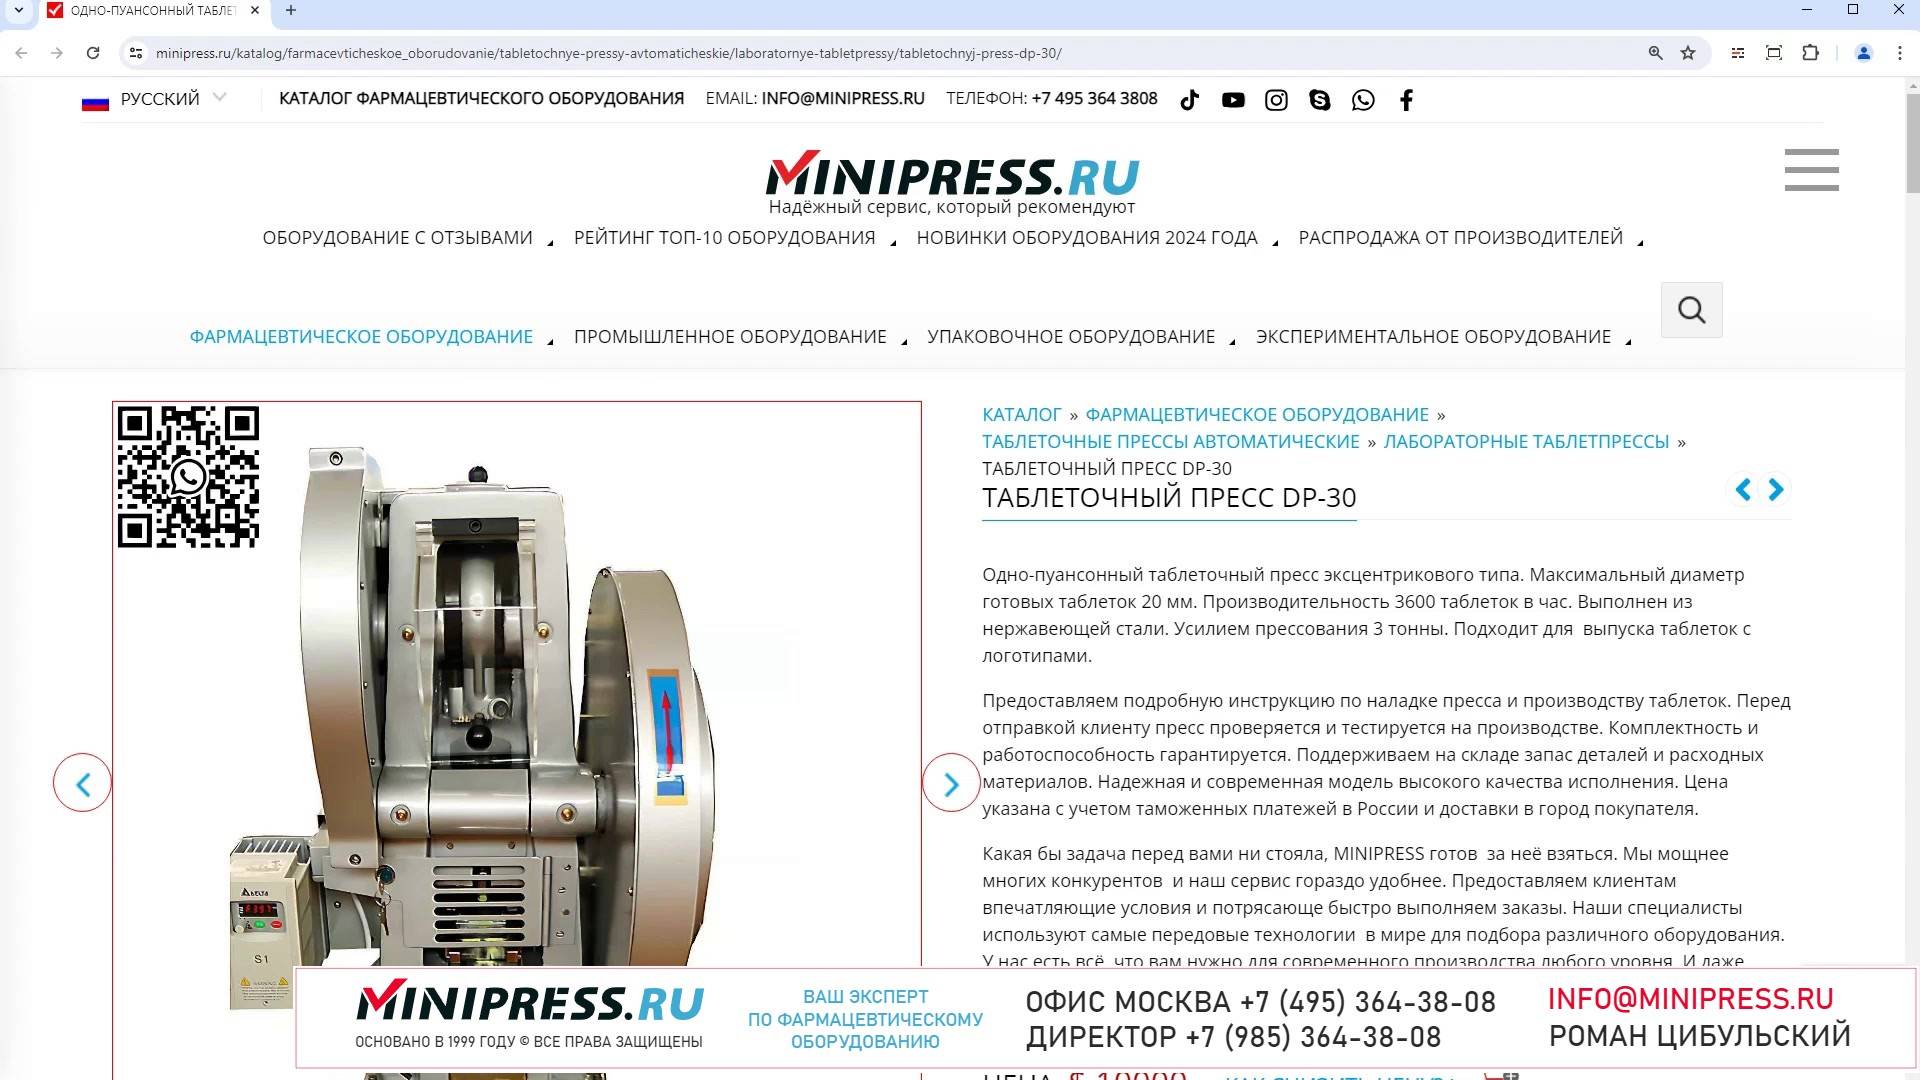 Minipress.ru Таблеточный пресс DP-30